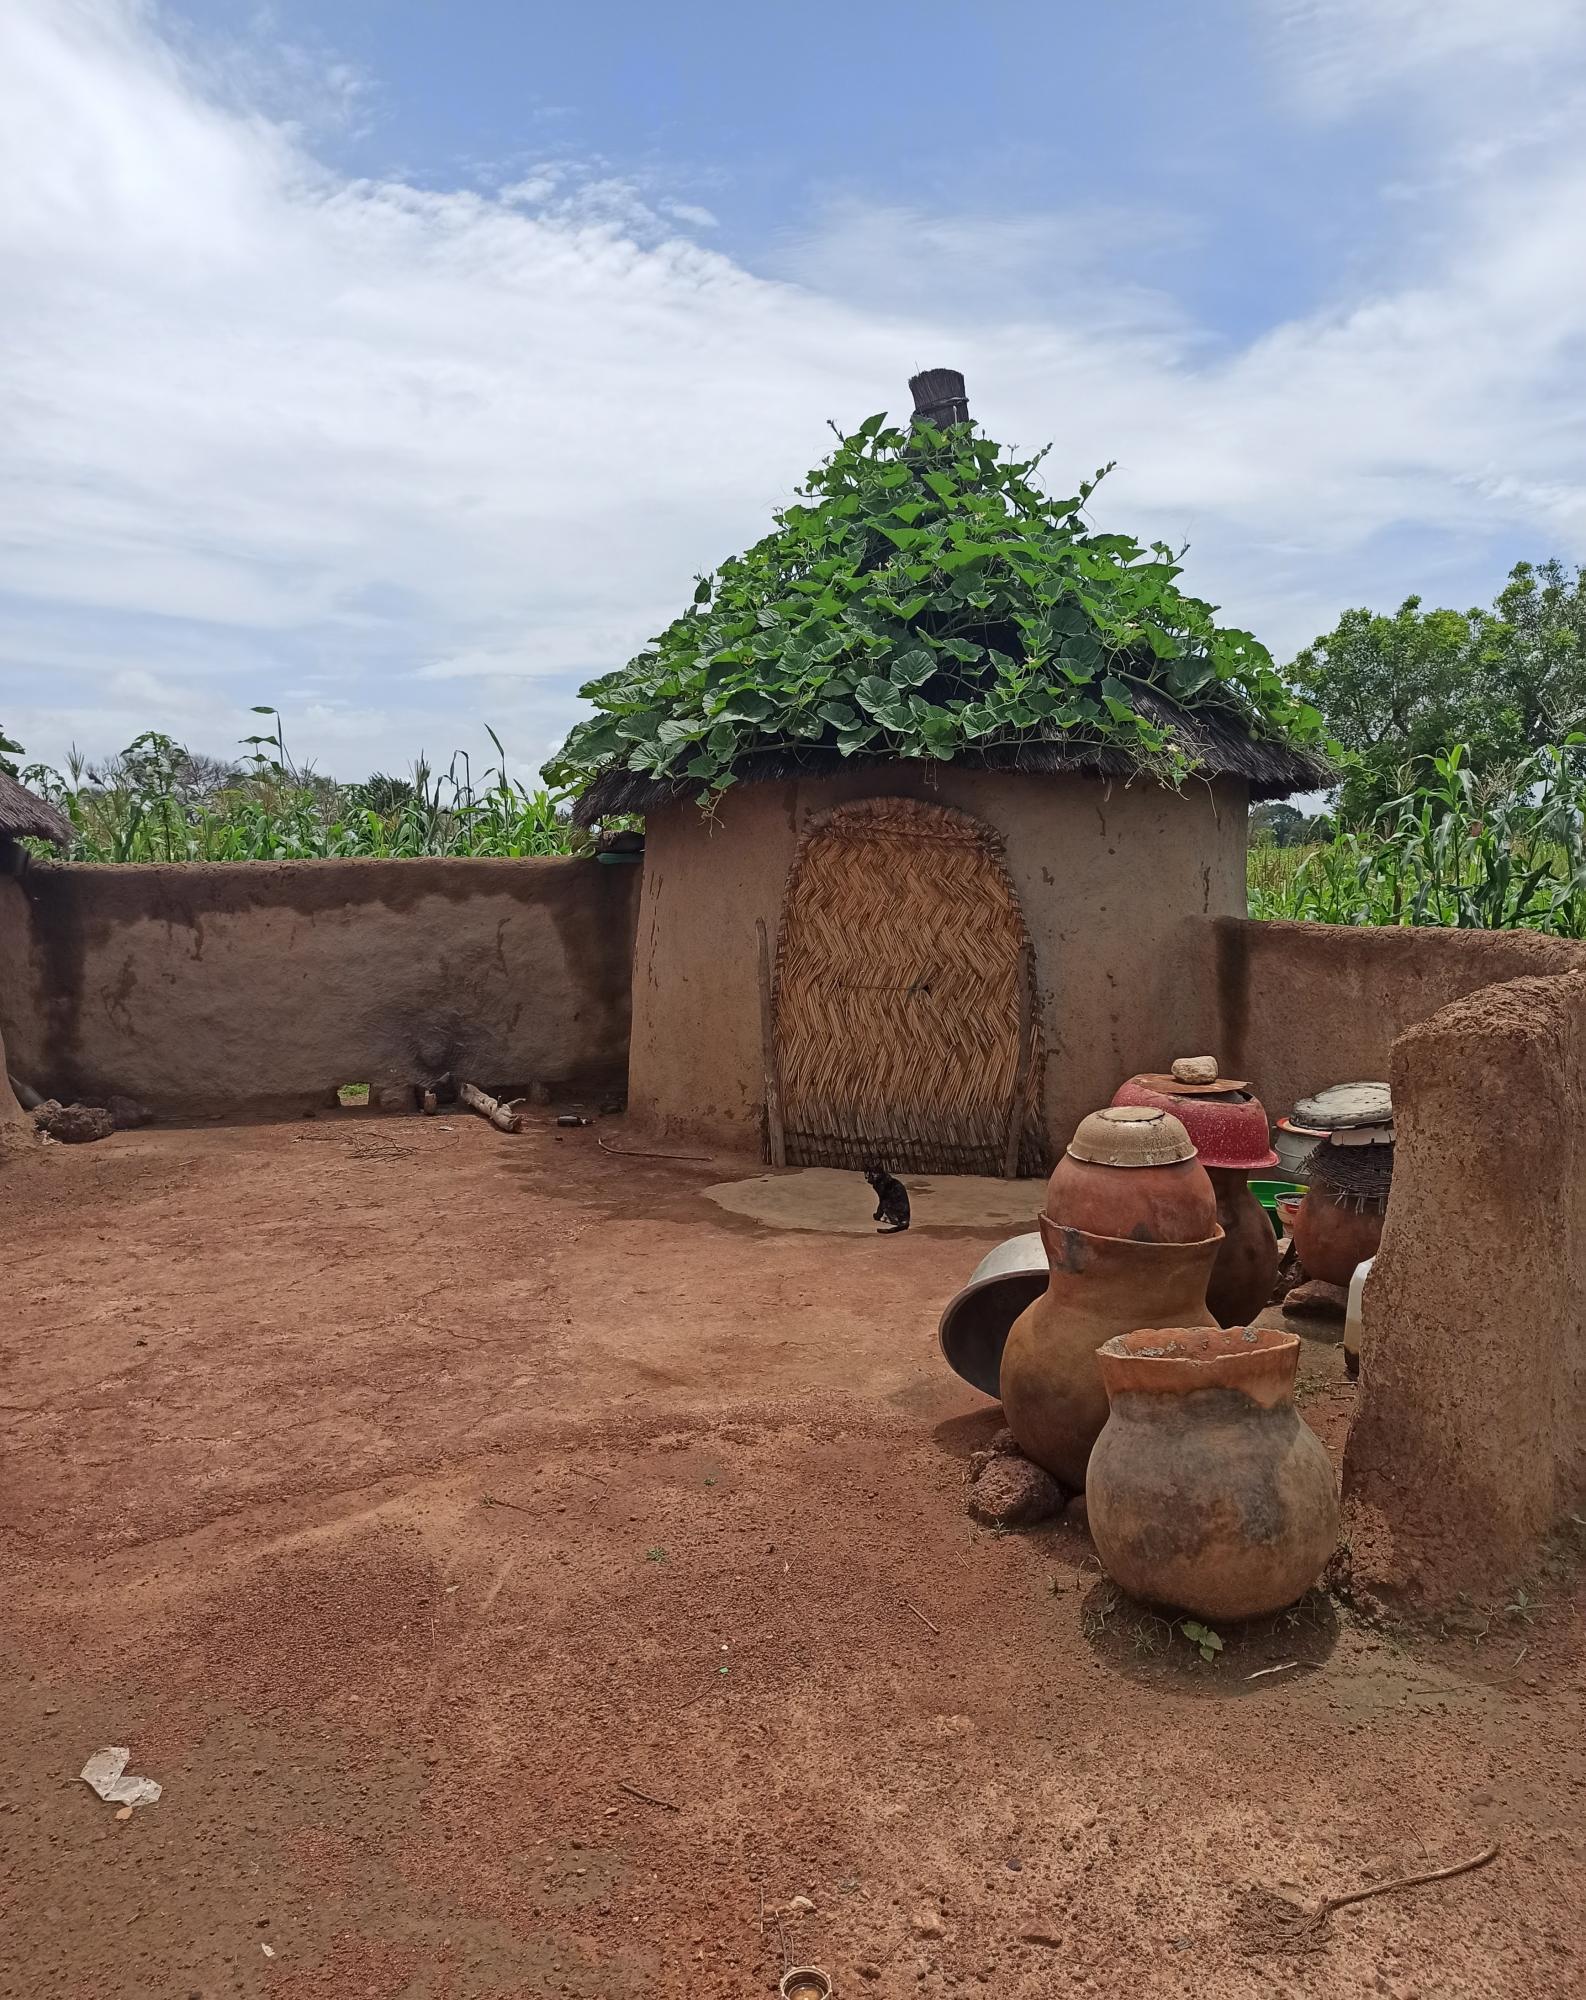 Traditional banco hut in Burkina Faso